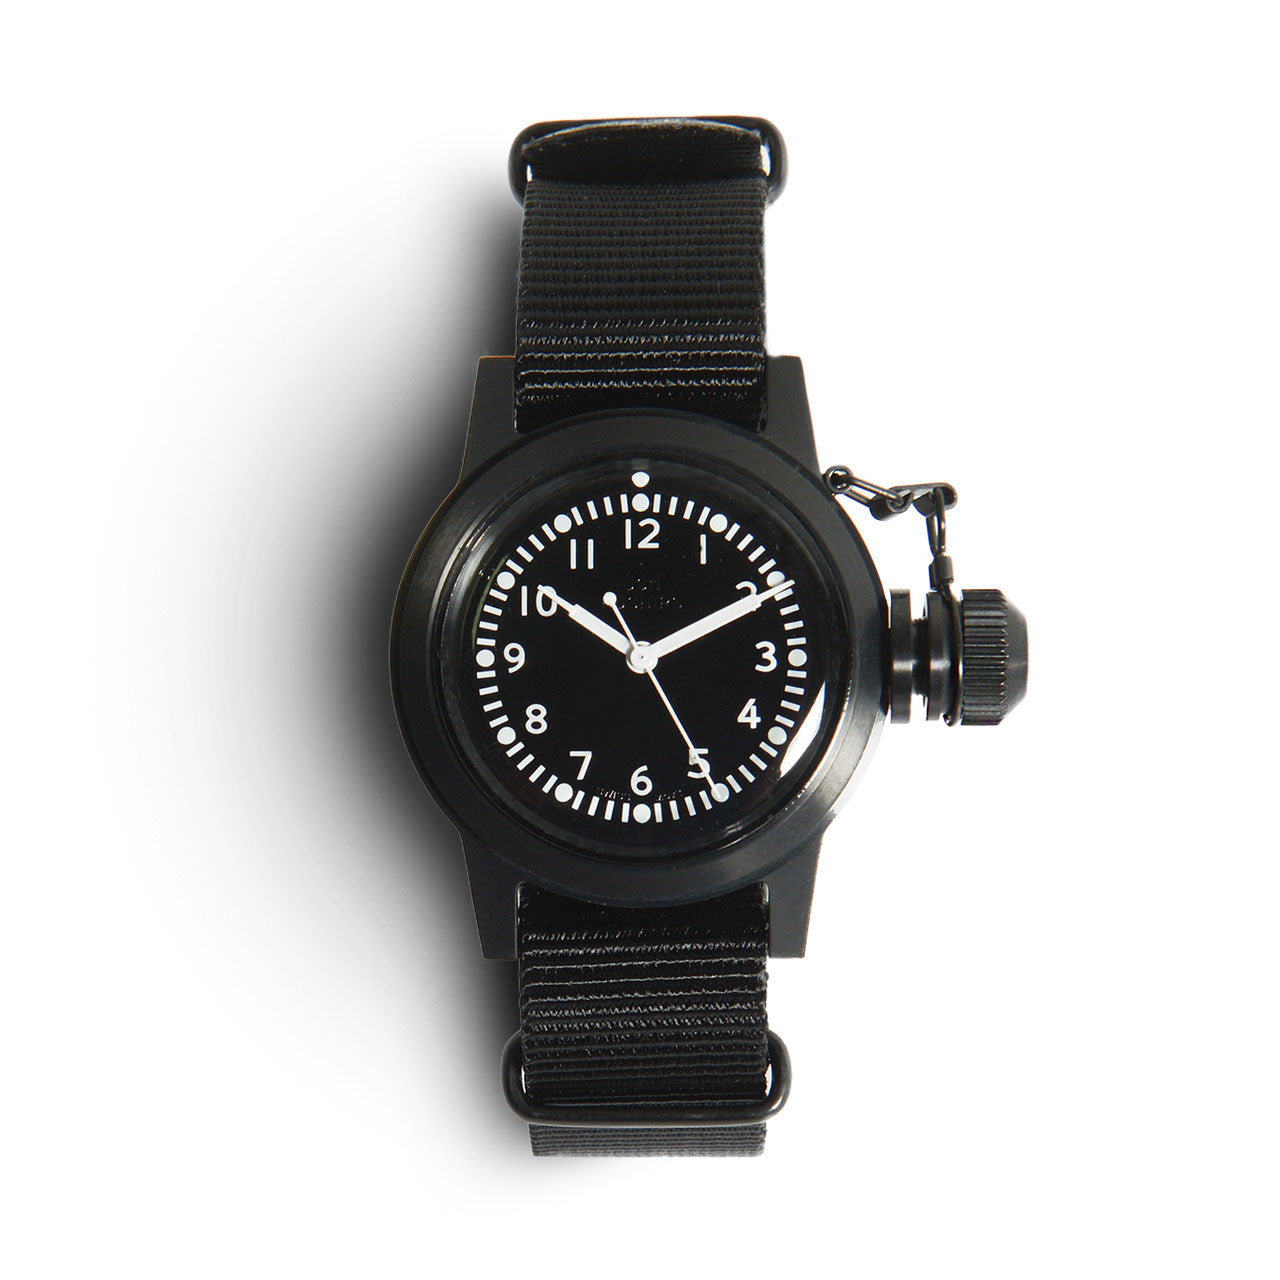 Часы для дайвинга военно-морского флота Naval Watch Co.